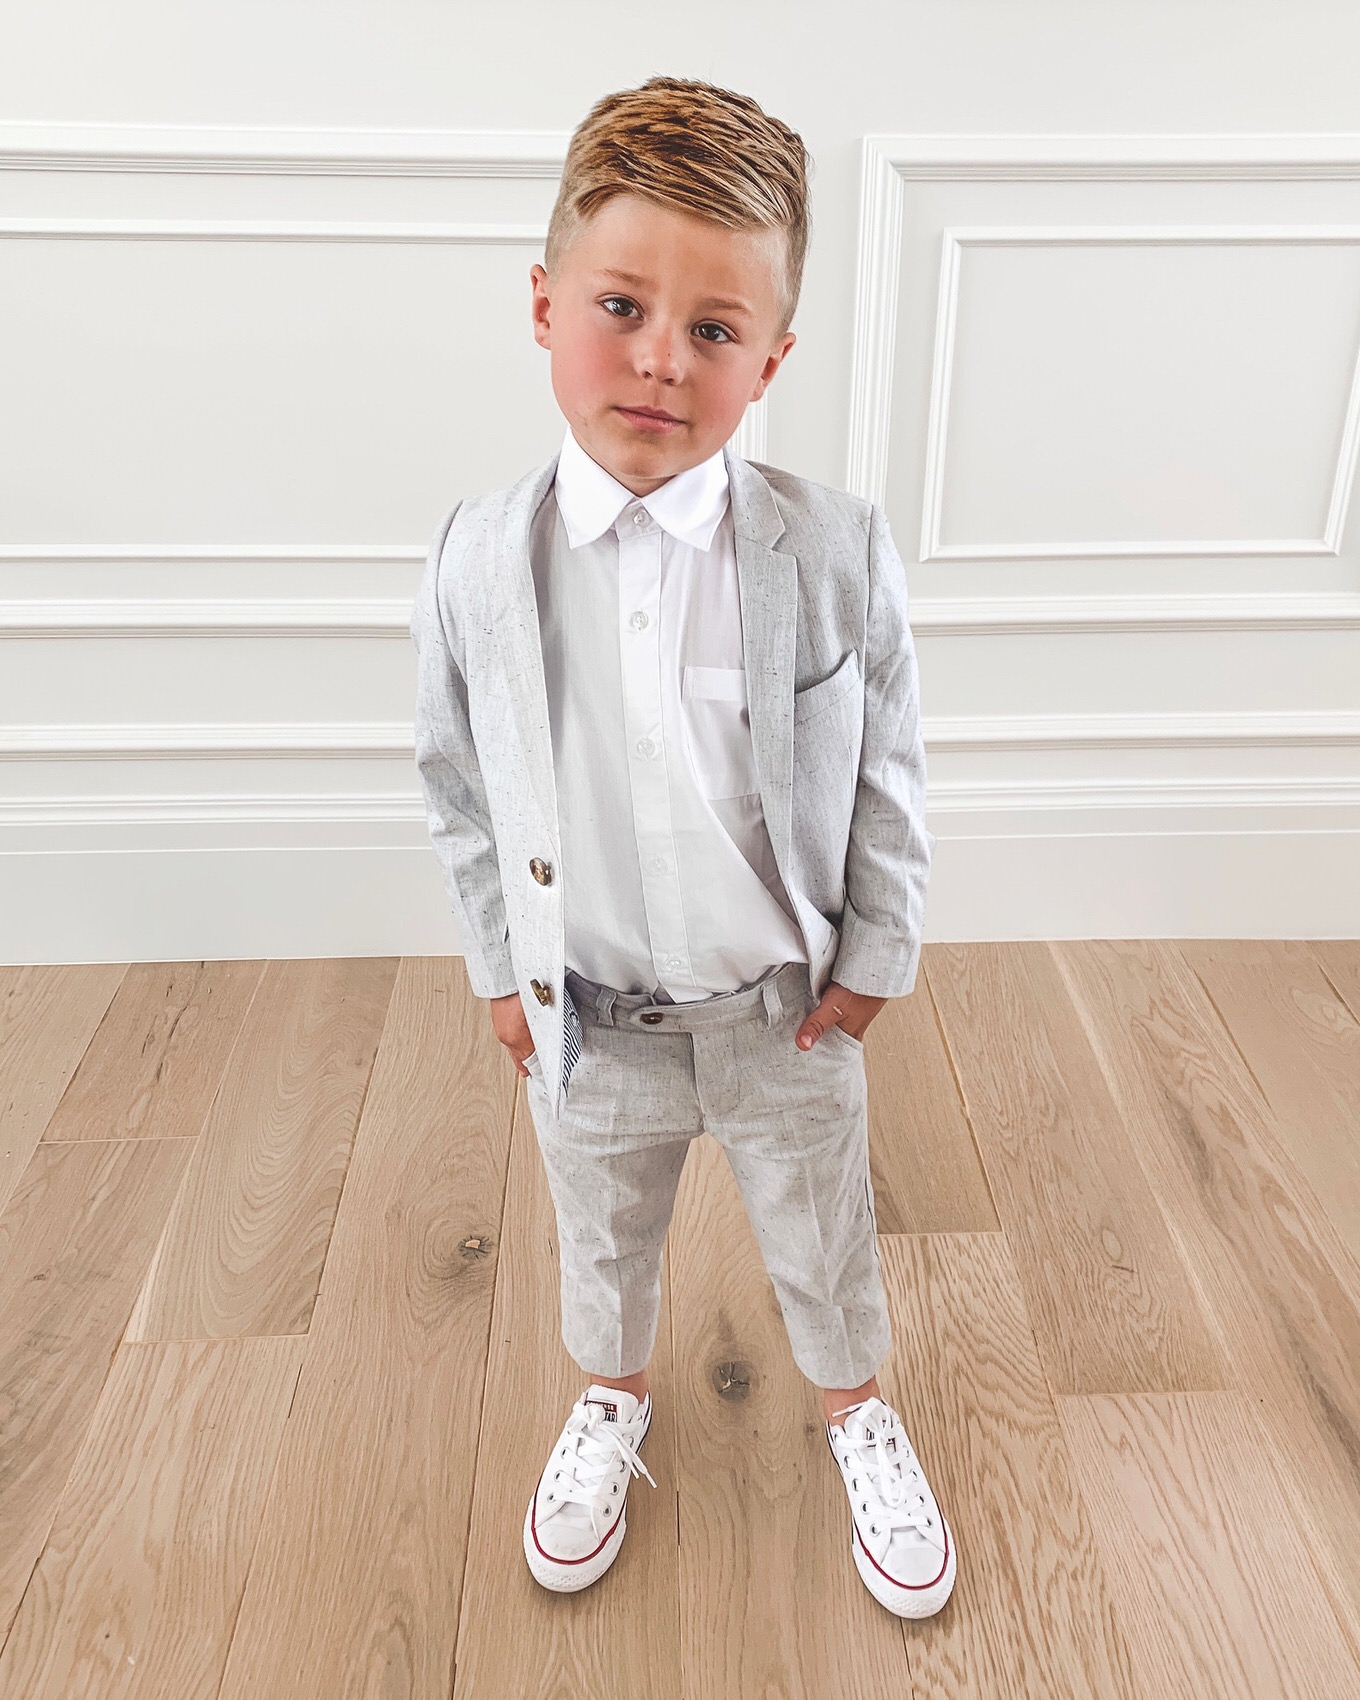 kid in suit